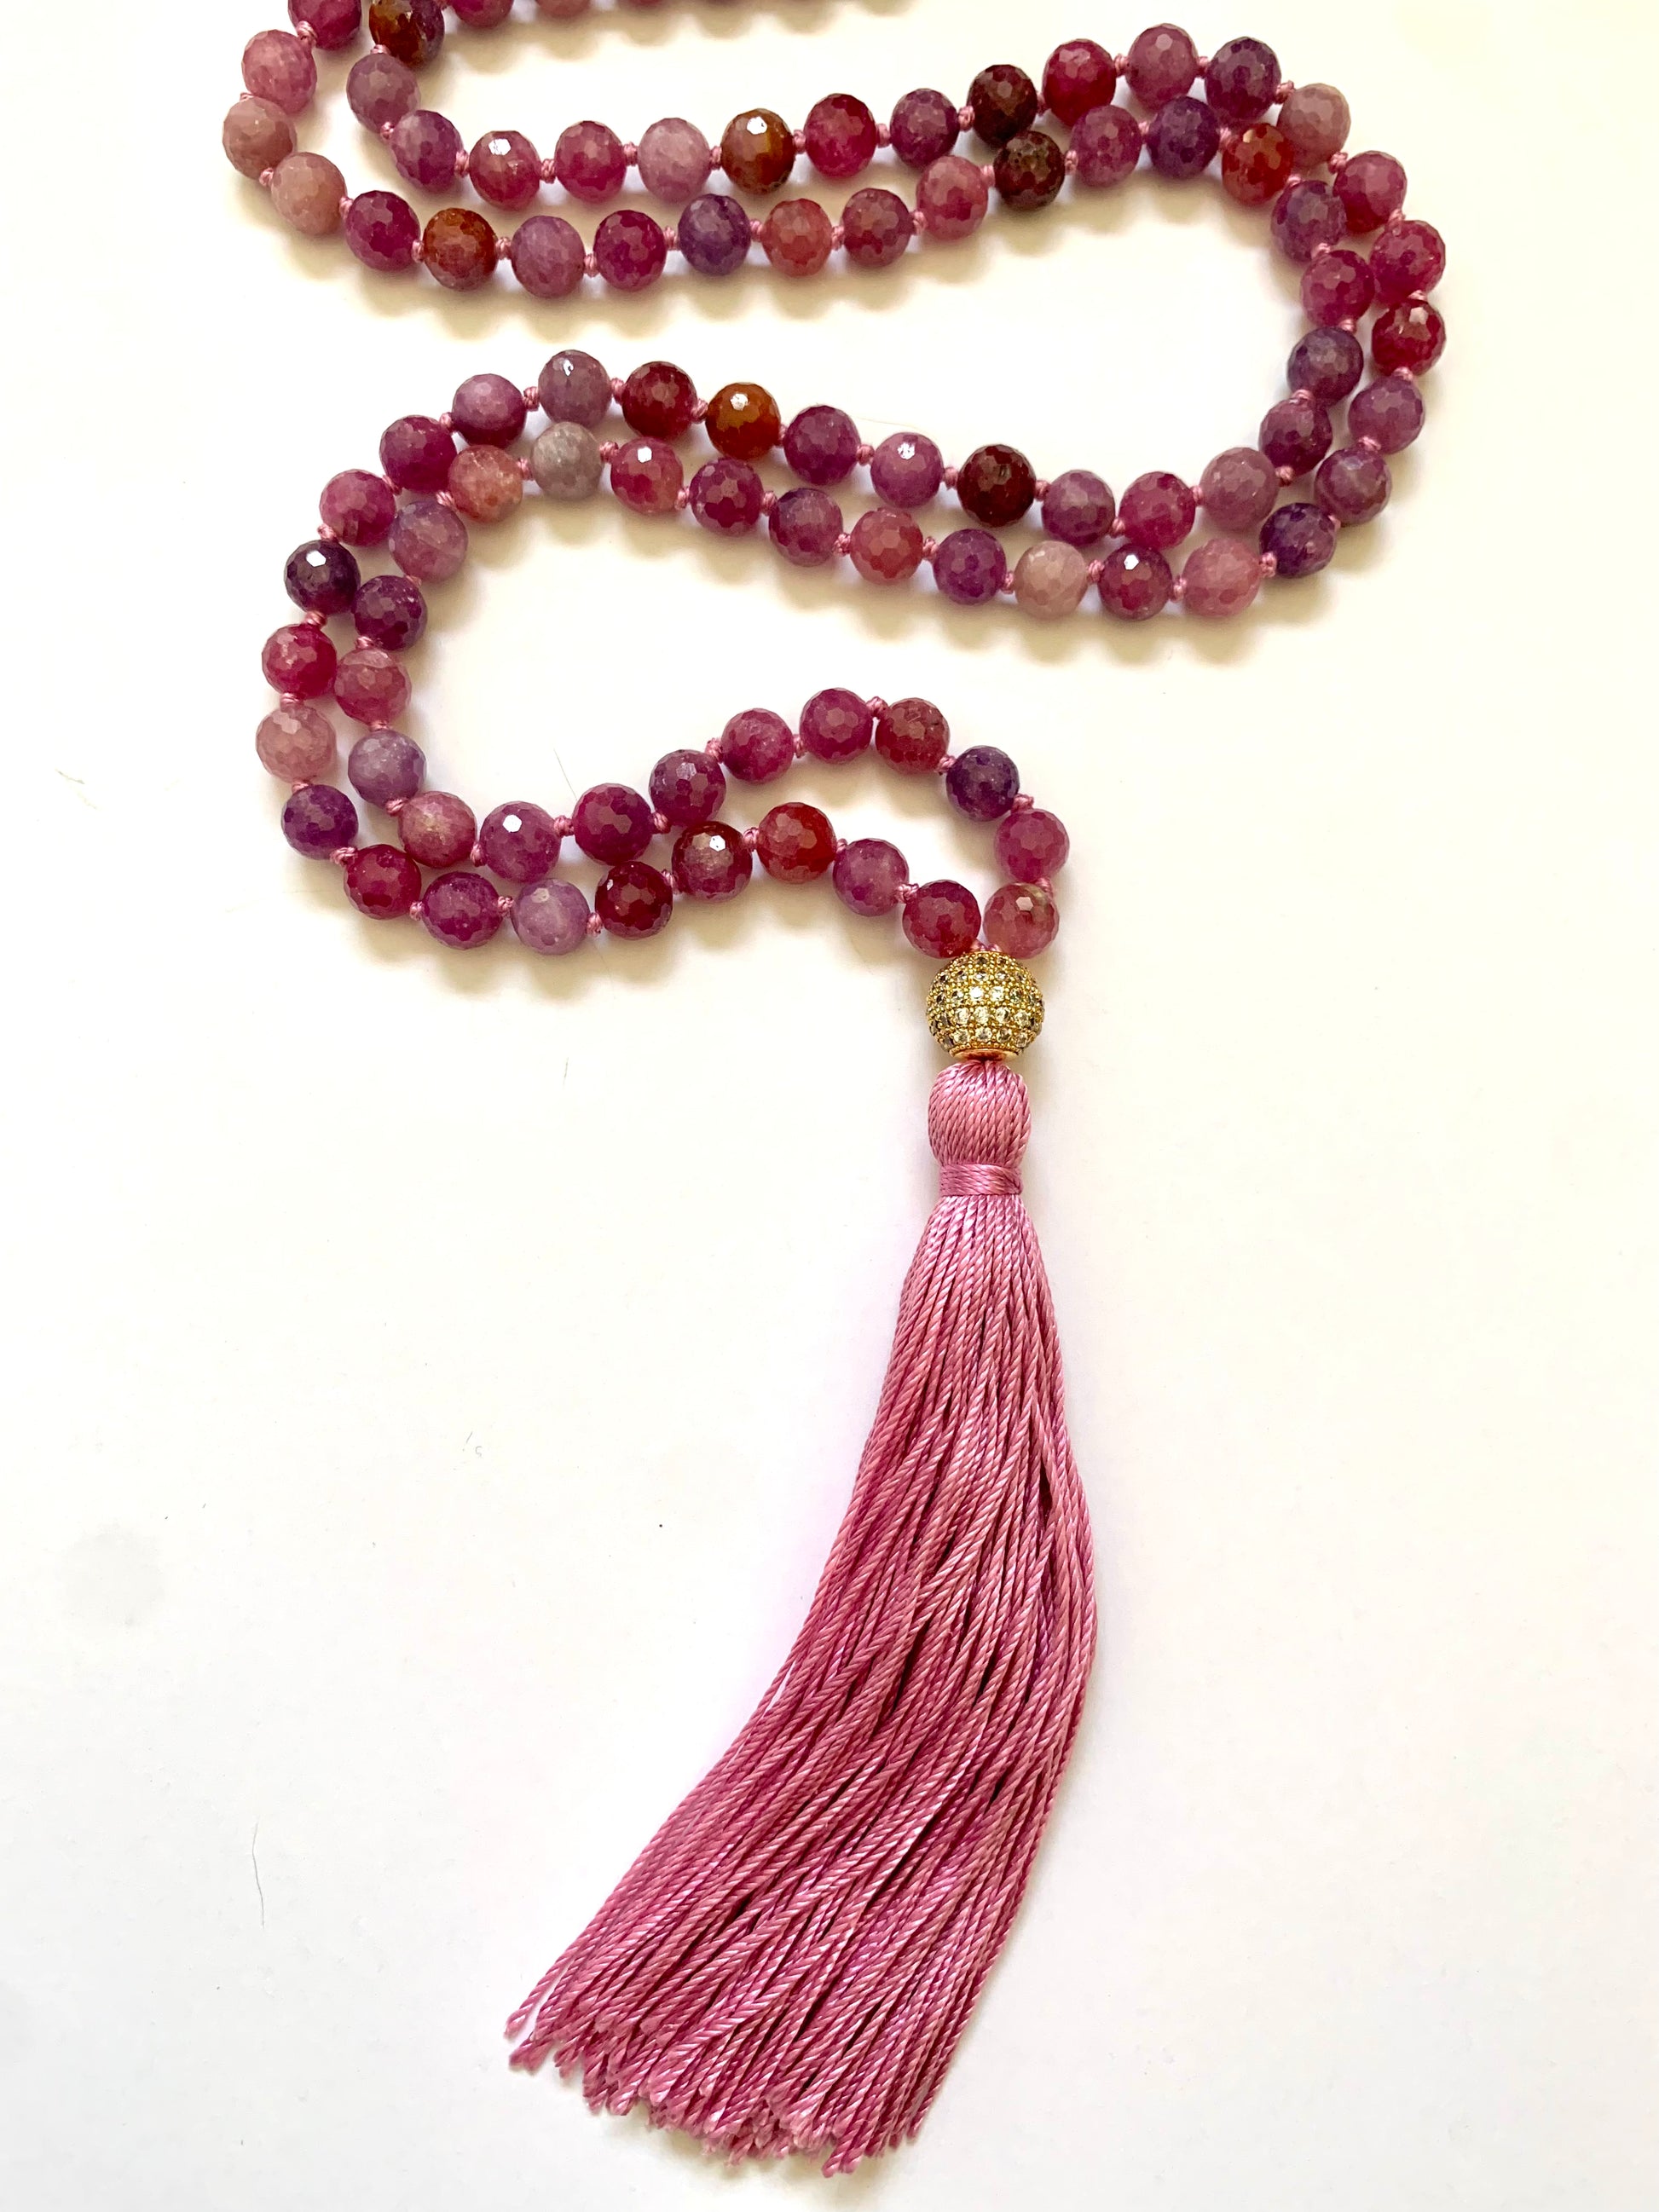 Ruby Mala Beads, 6mm, knotted, pink silk tassel, pave cz guru bead